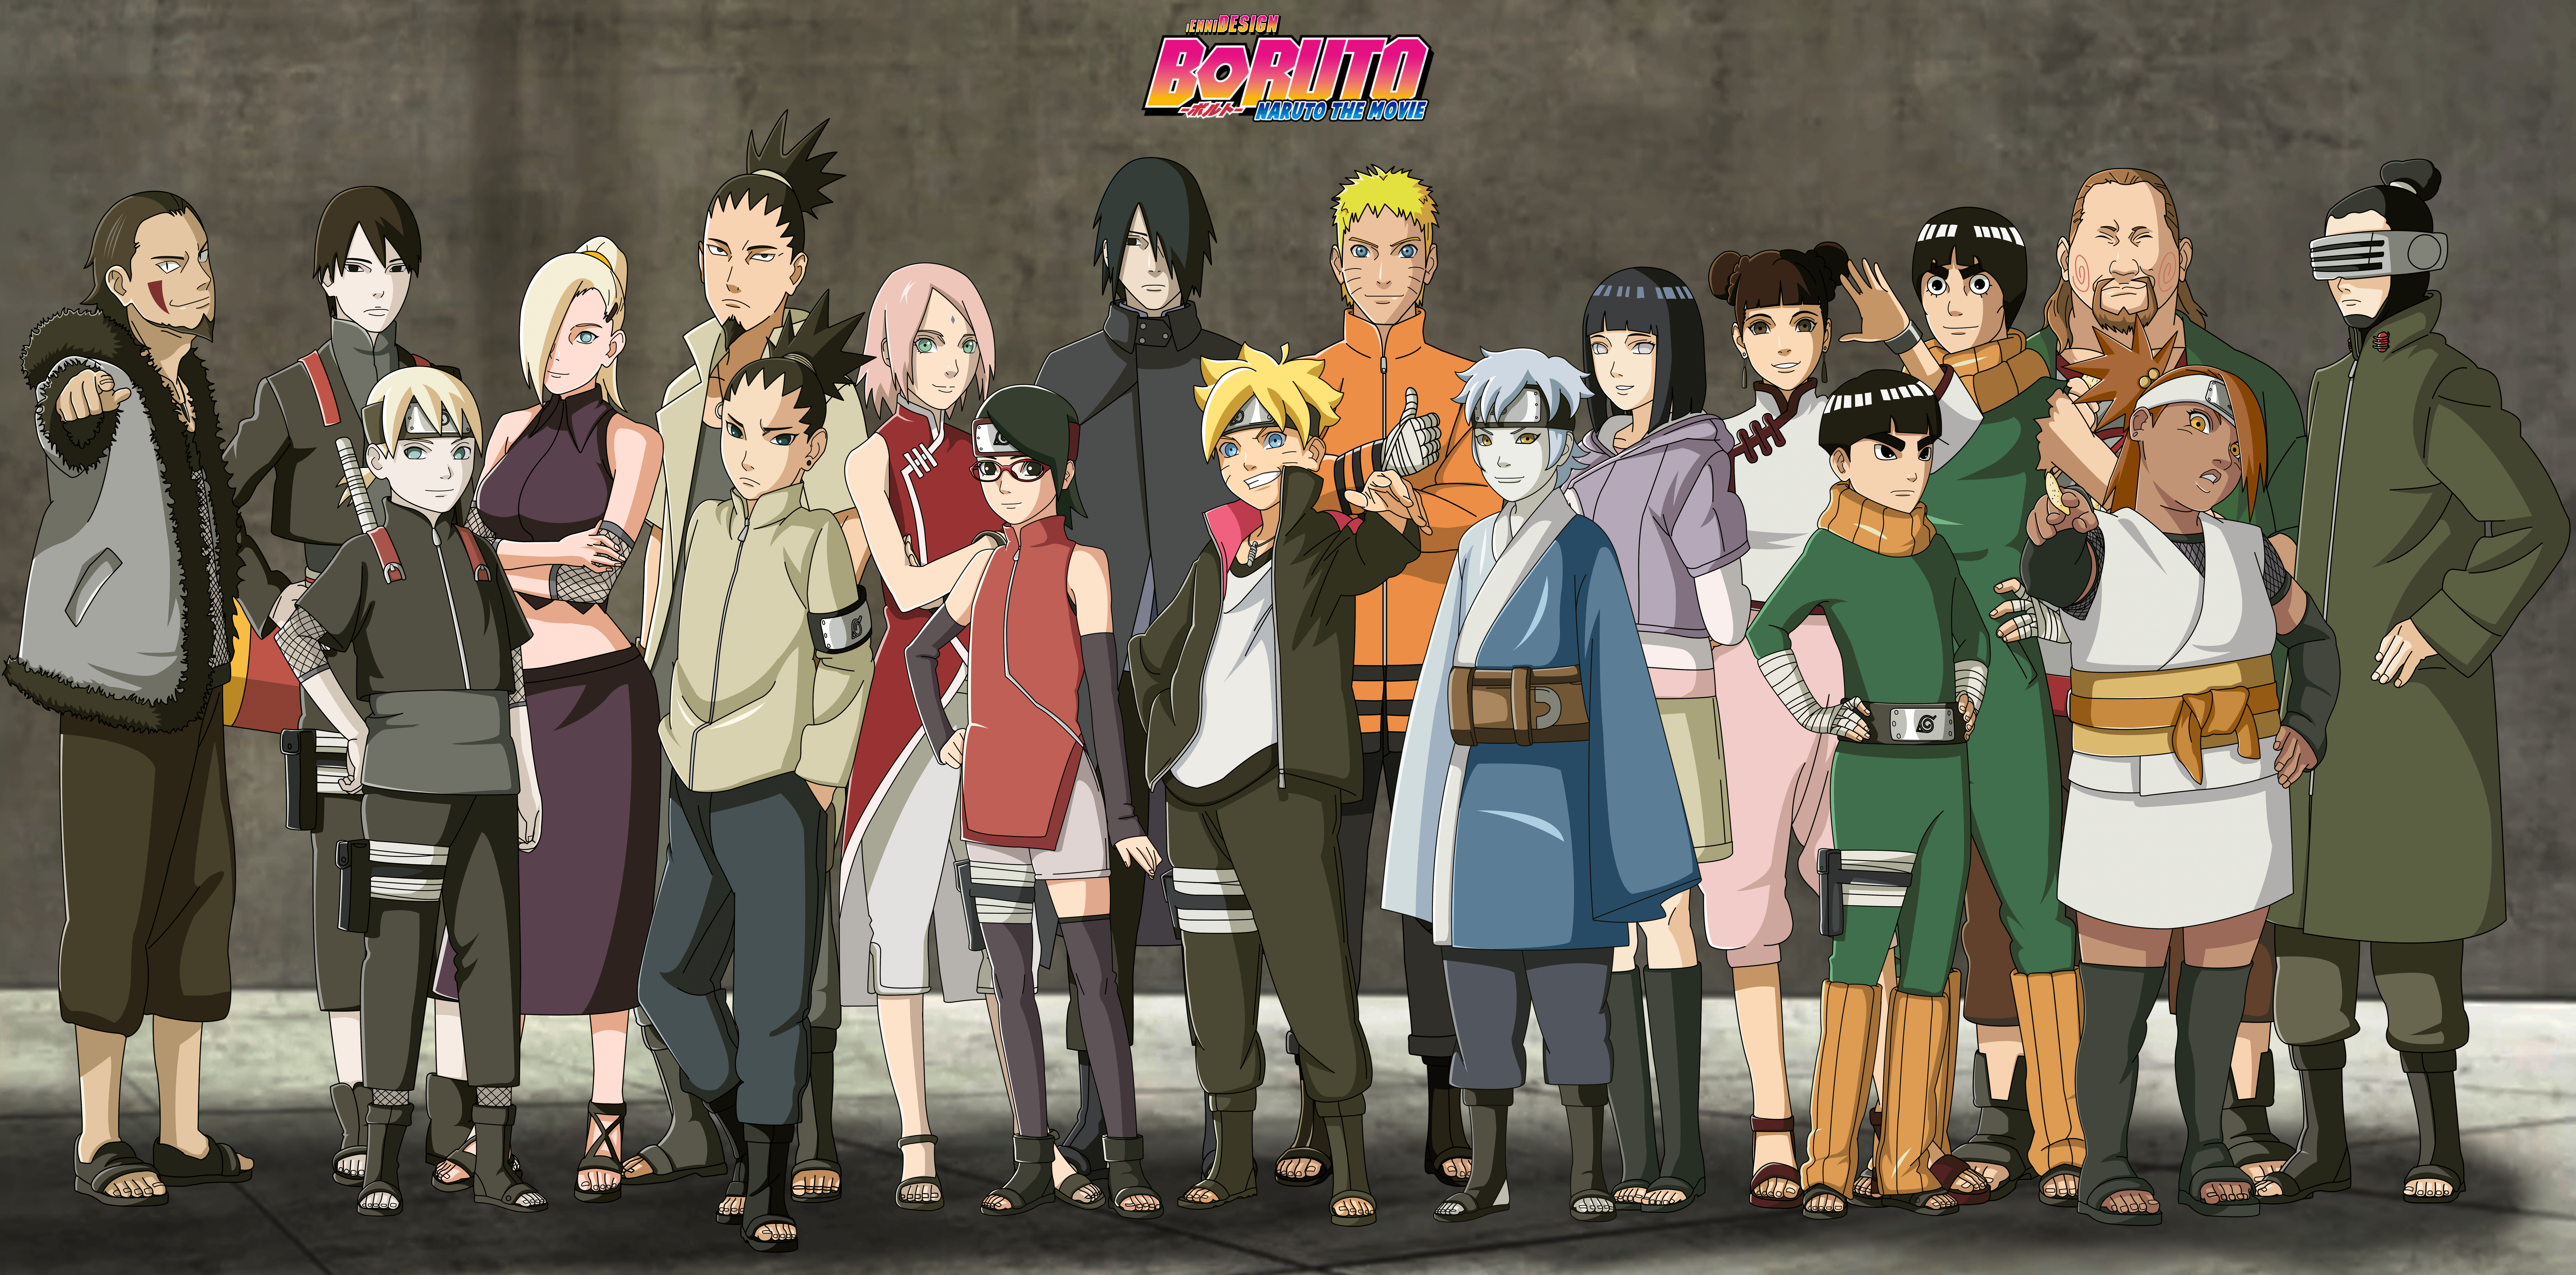 Boruto: Naruto Next Generations Episode 215